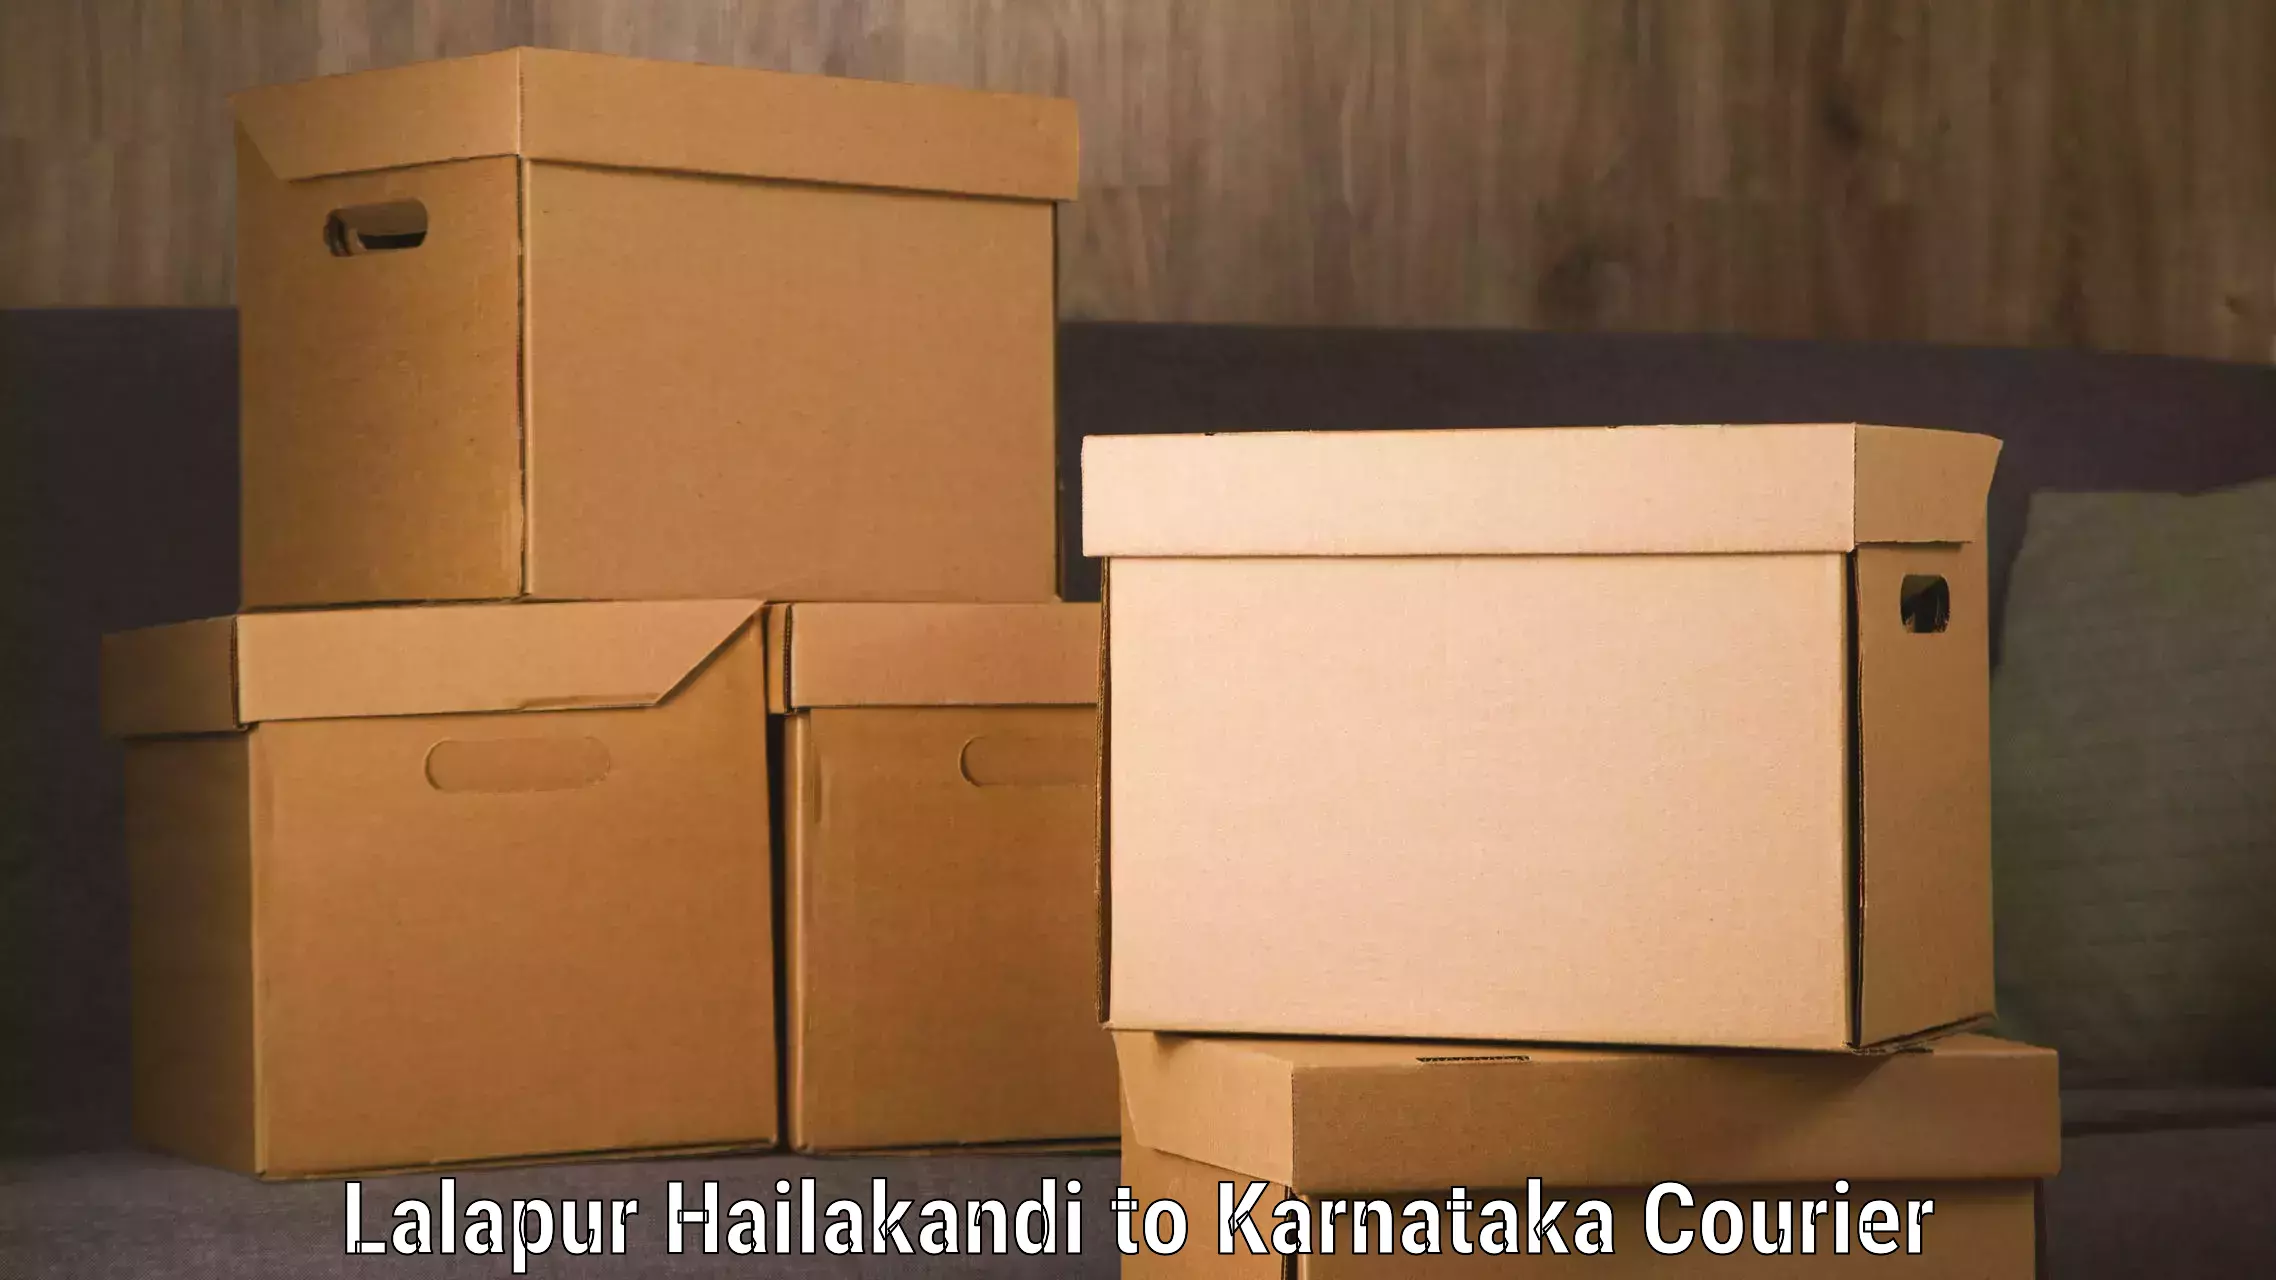 Door-to-door baggage service Lalapur Hailakandi to Bangarapet